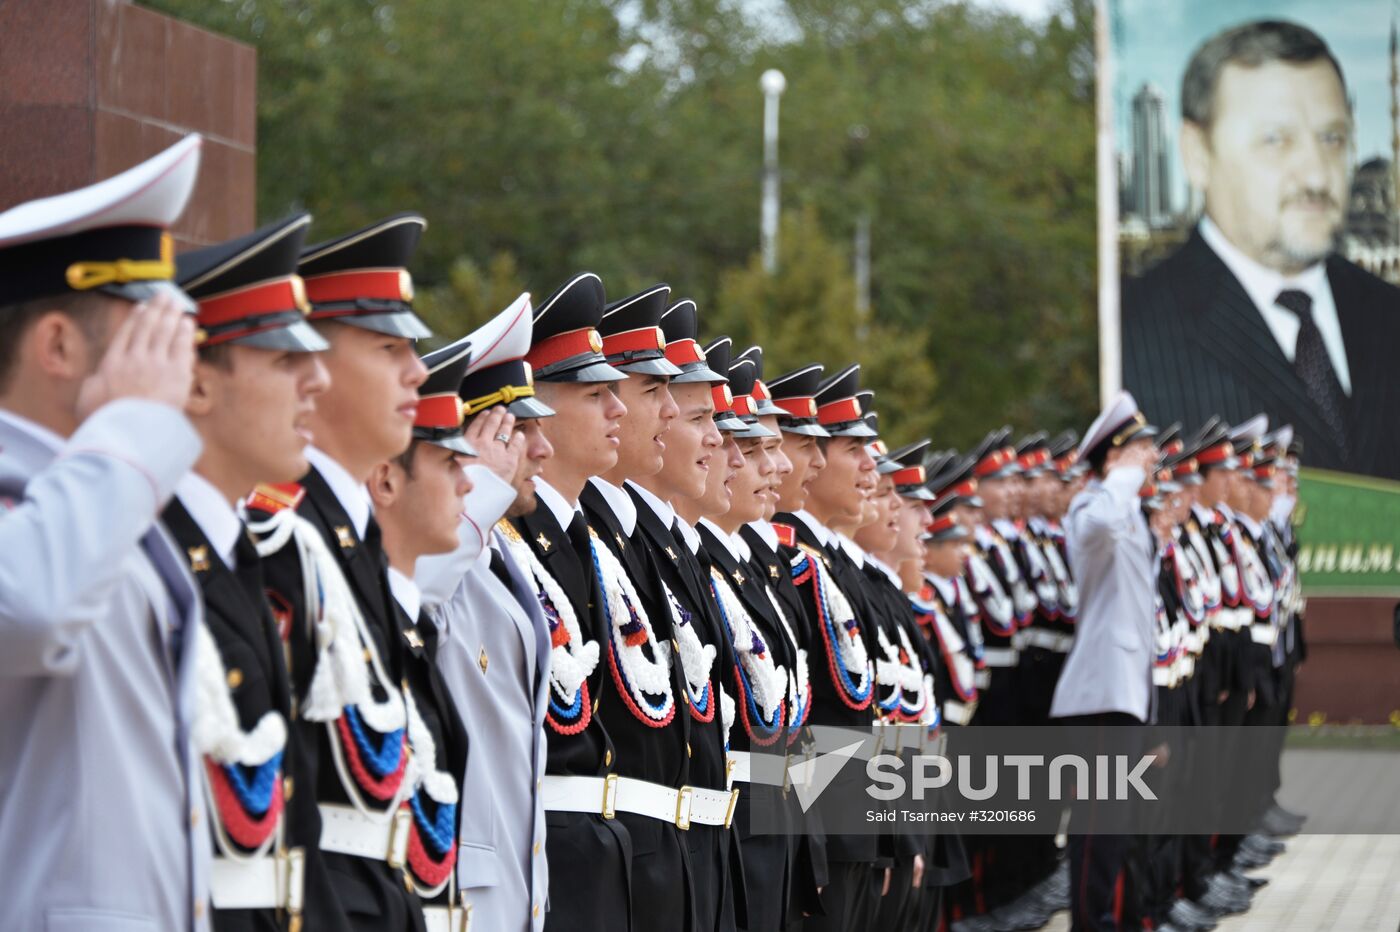 Grozny Suvorov Military School cadets take oath